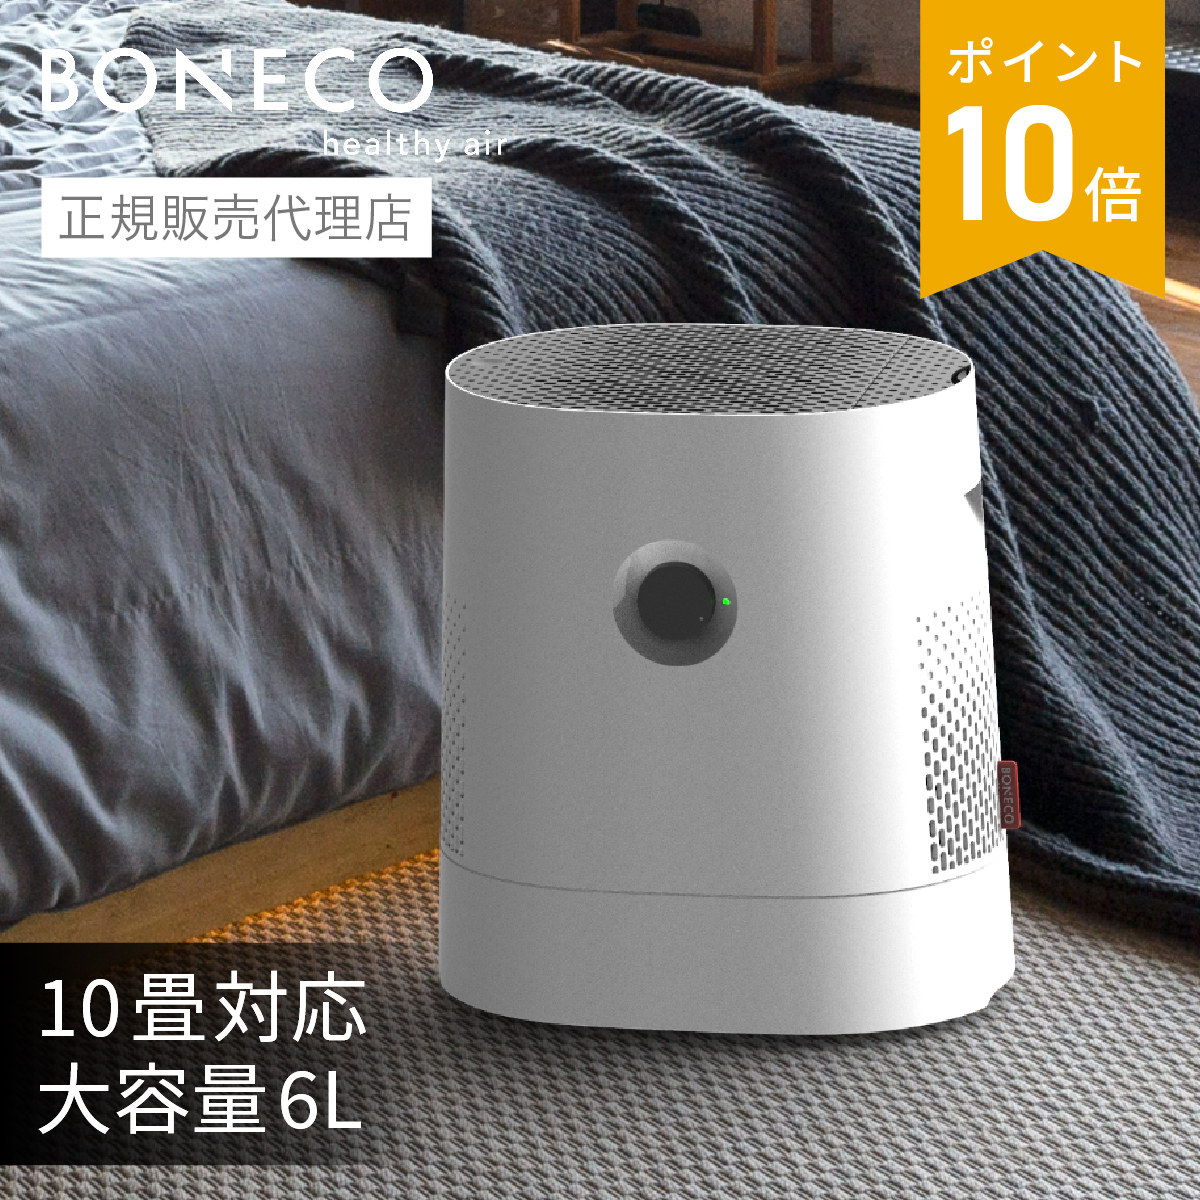 BONECO HEALTHY AIR 気化式加湿器 W220 ボネコ 【ギフト